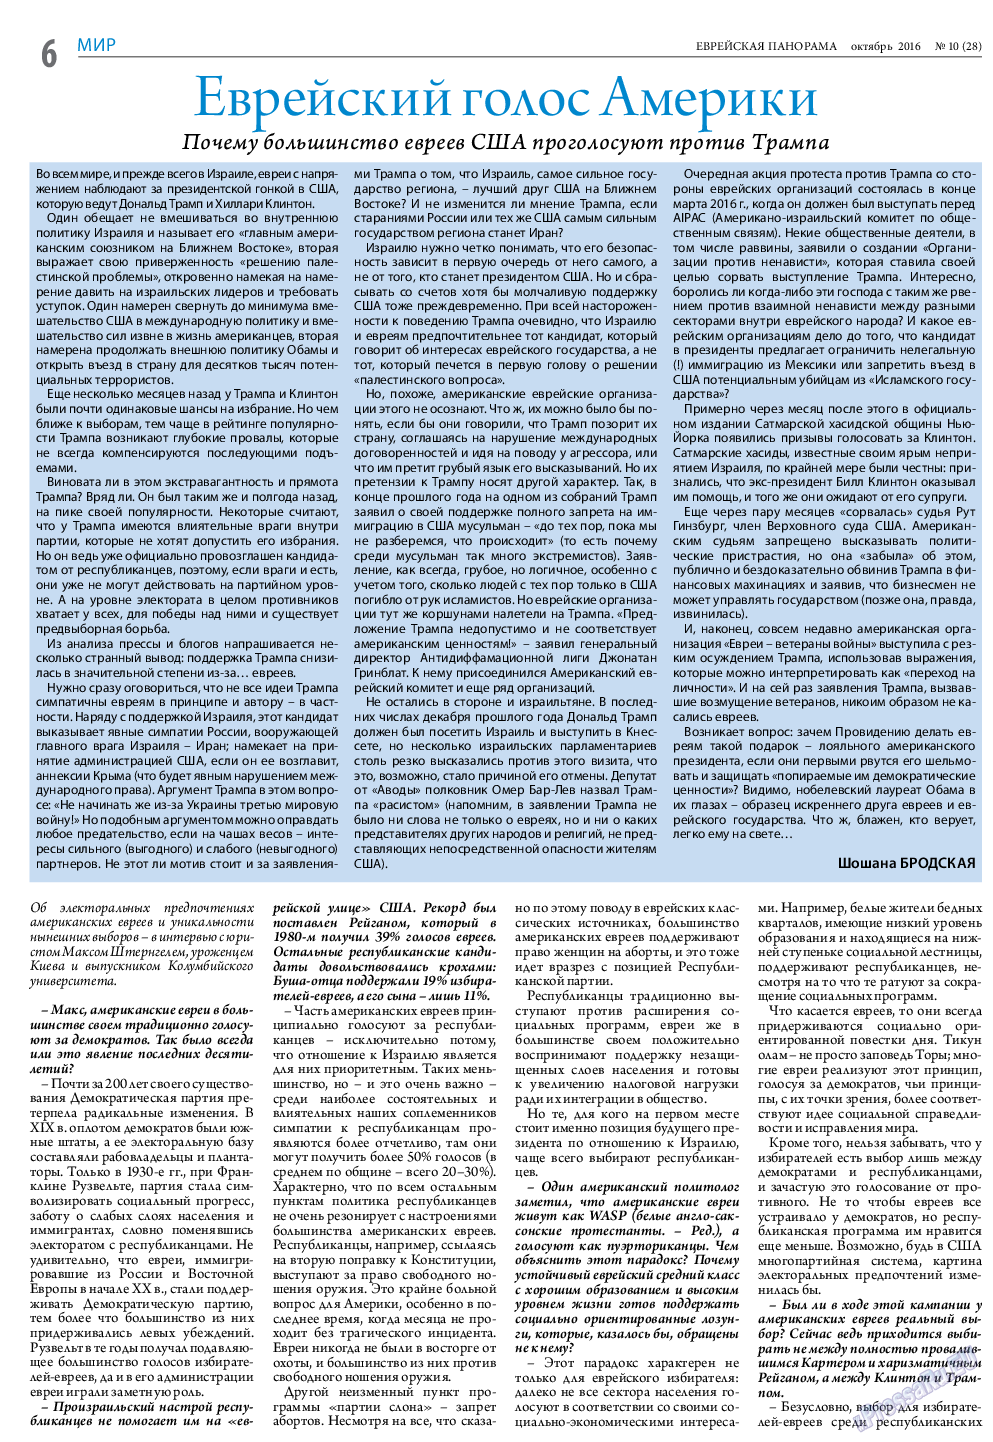 Еврейская панорама, газета. 2016 №10 стр.6